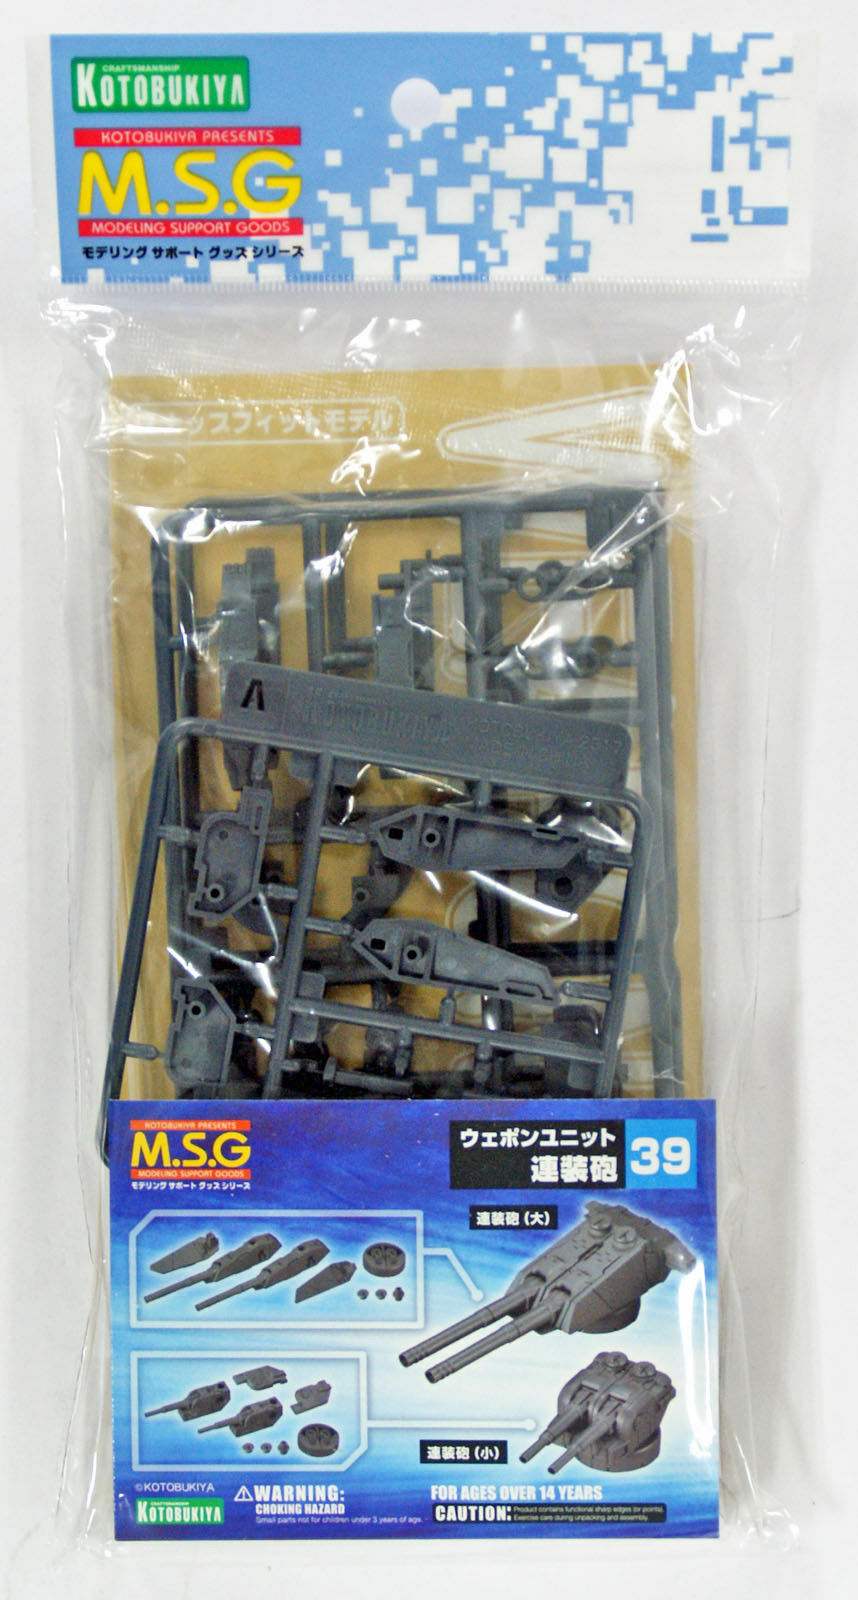 Kotobukiya Modeling Support Goods MSG Weapon Unit MW39 Multiple Twin Gun Kit USA